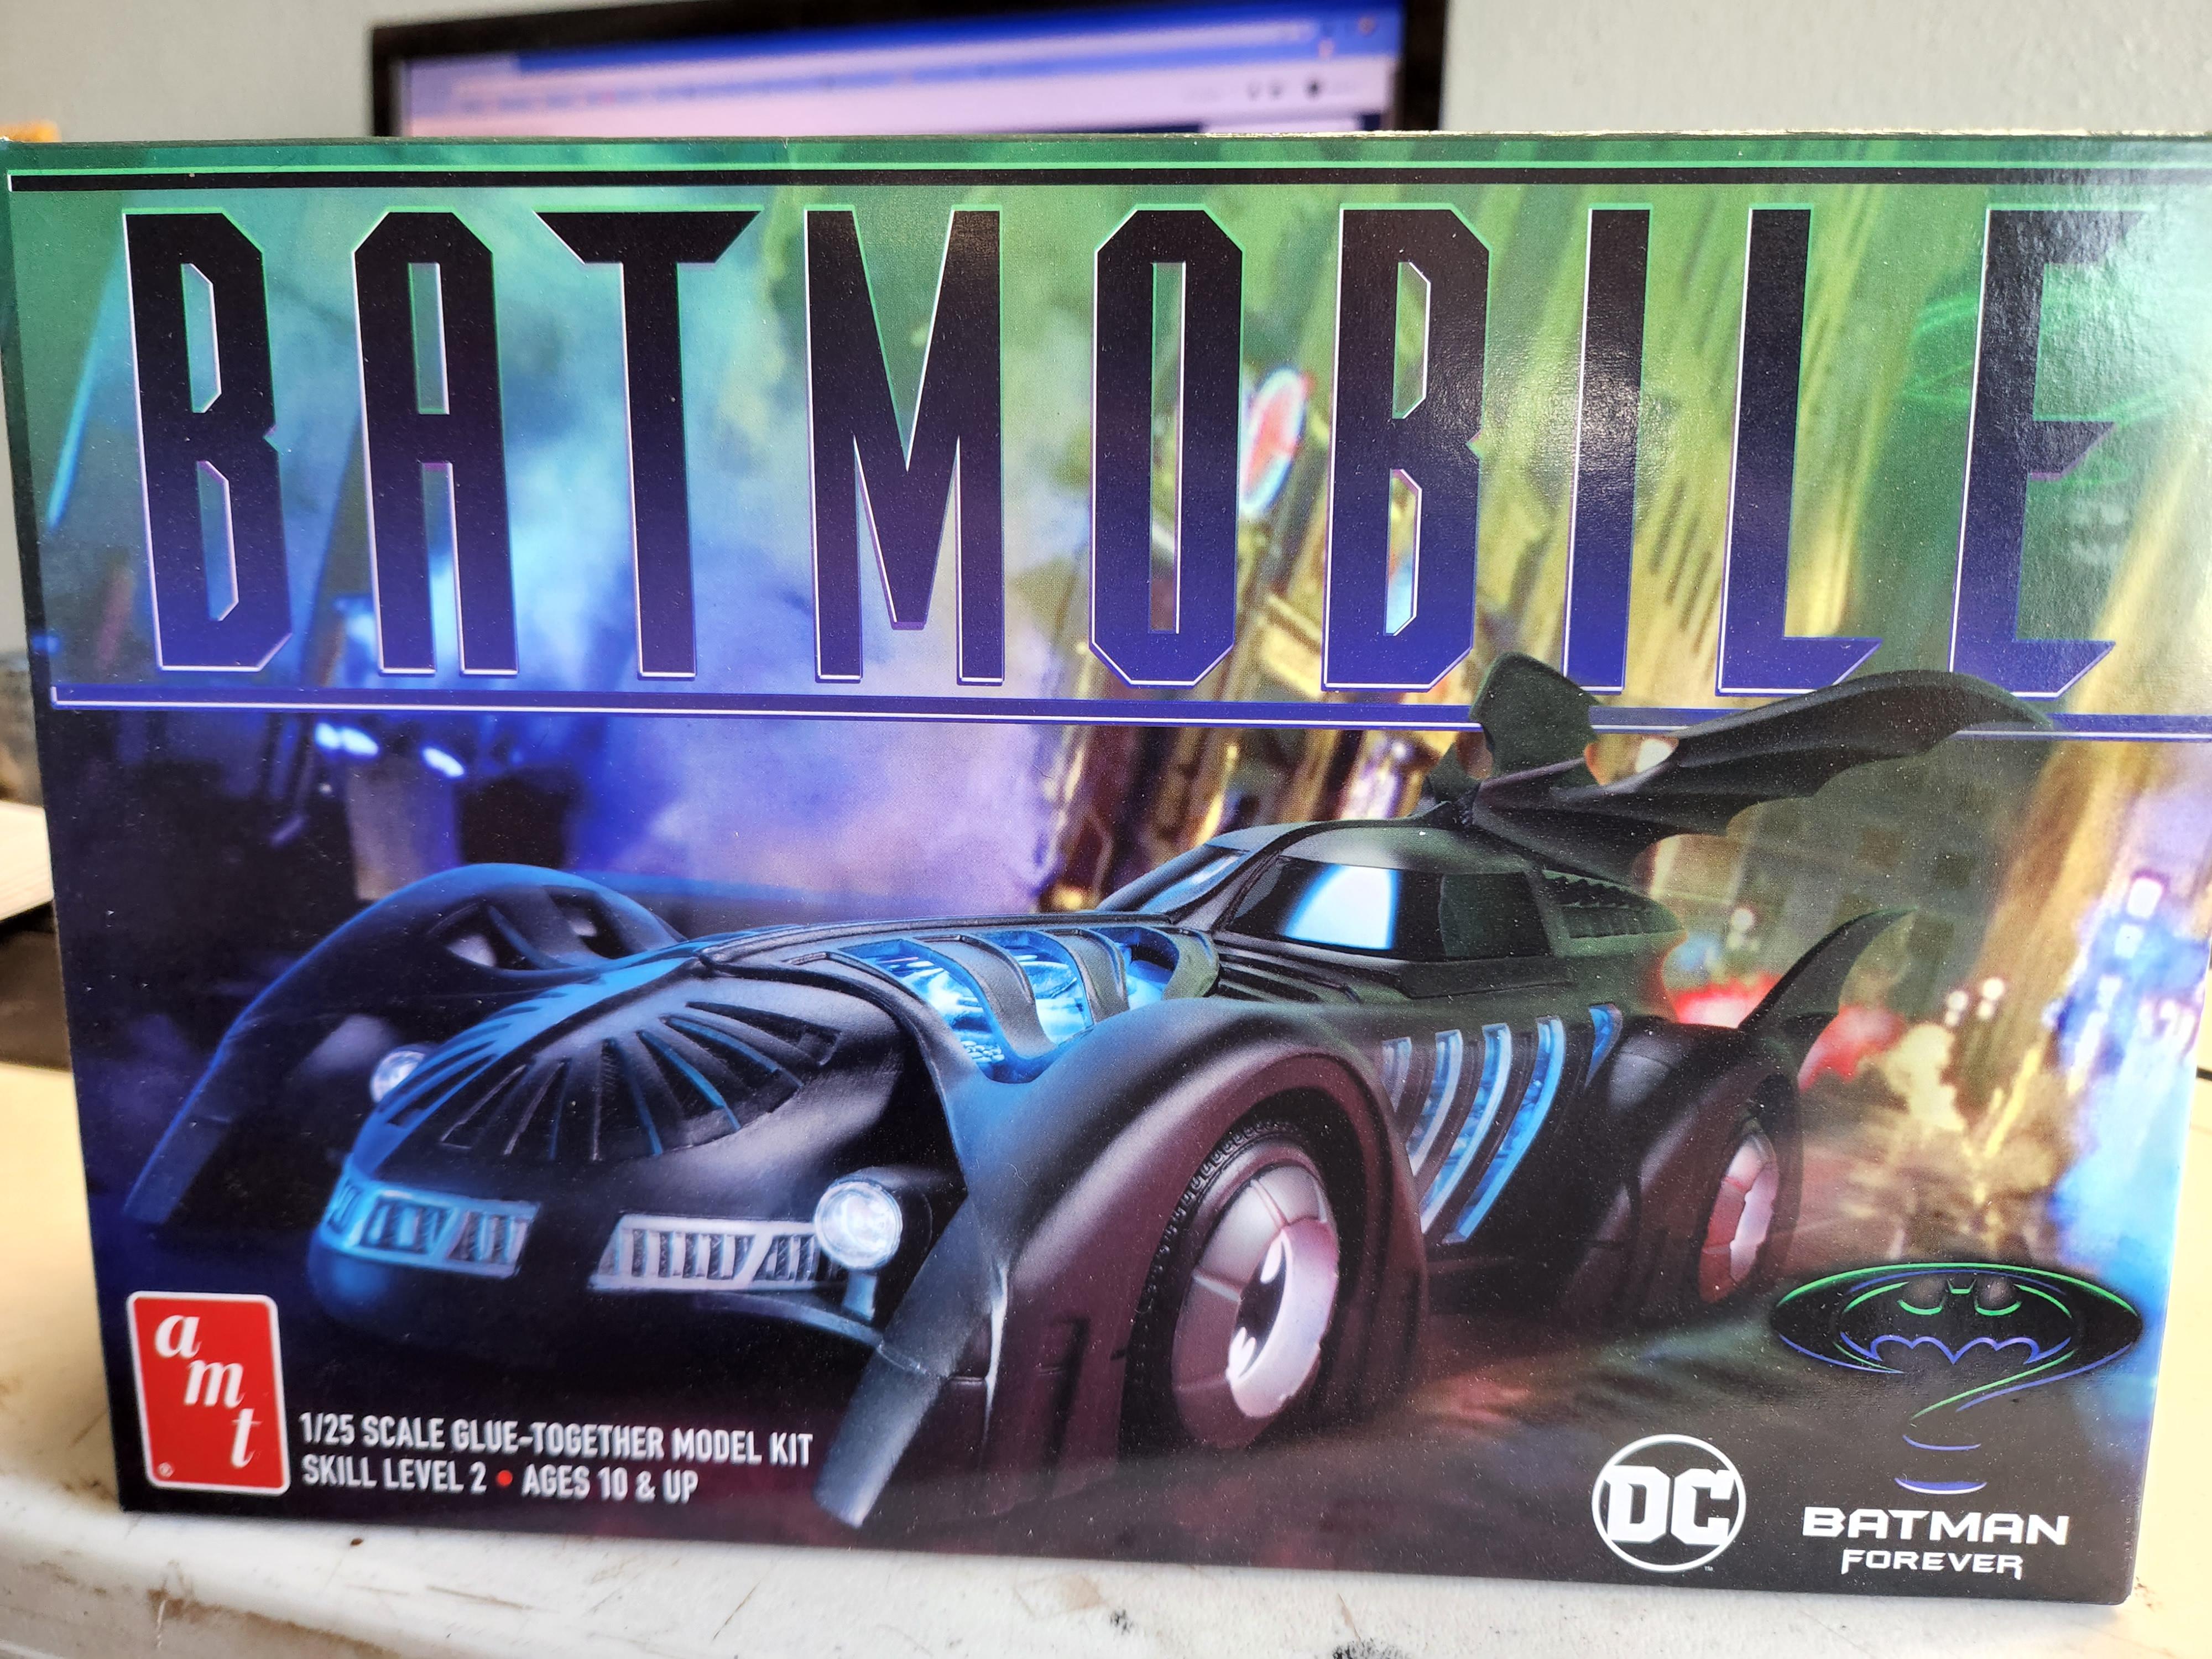 Un-Overdoing the Batman Forever Batmobile - WIP: Model Cars